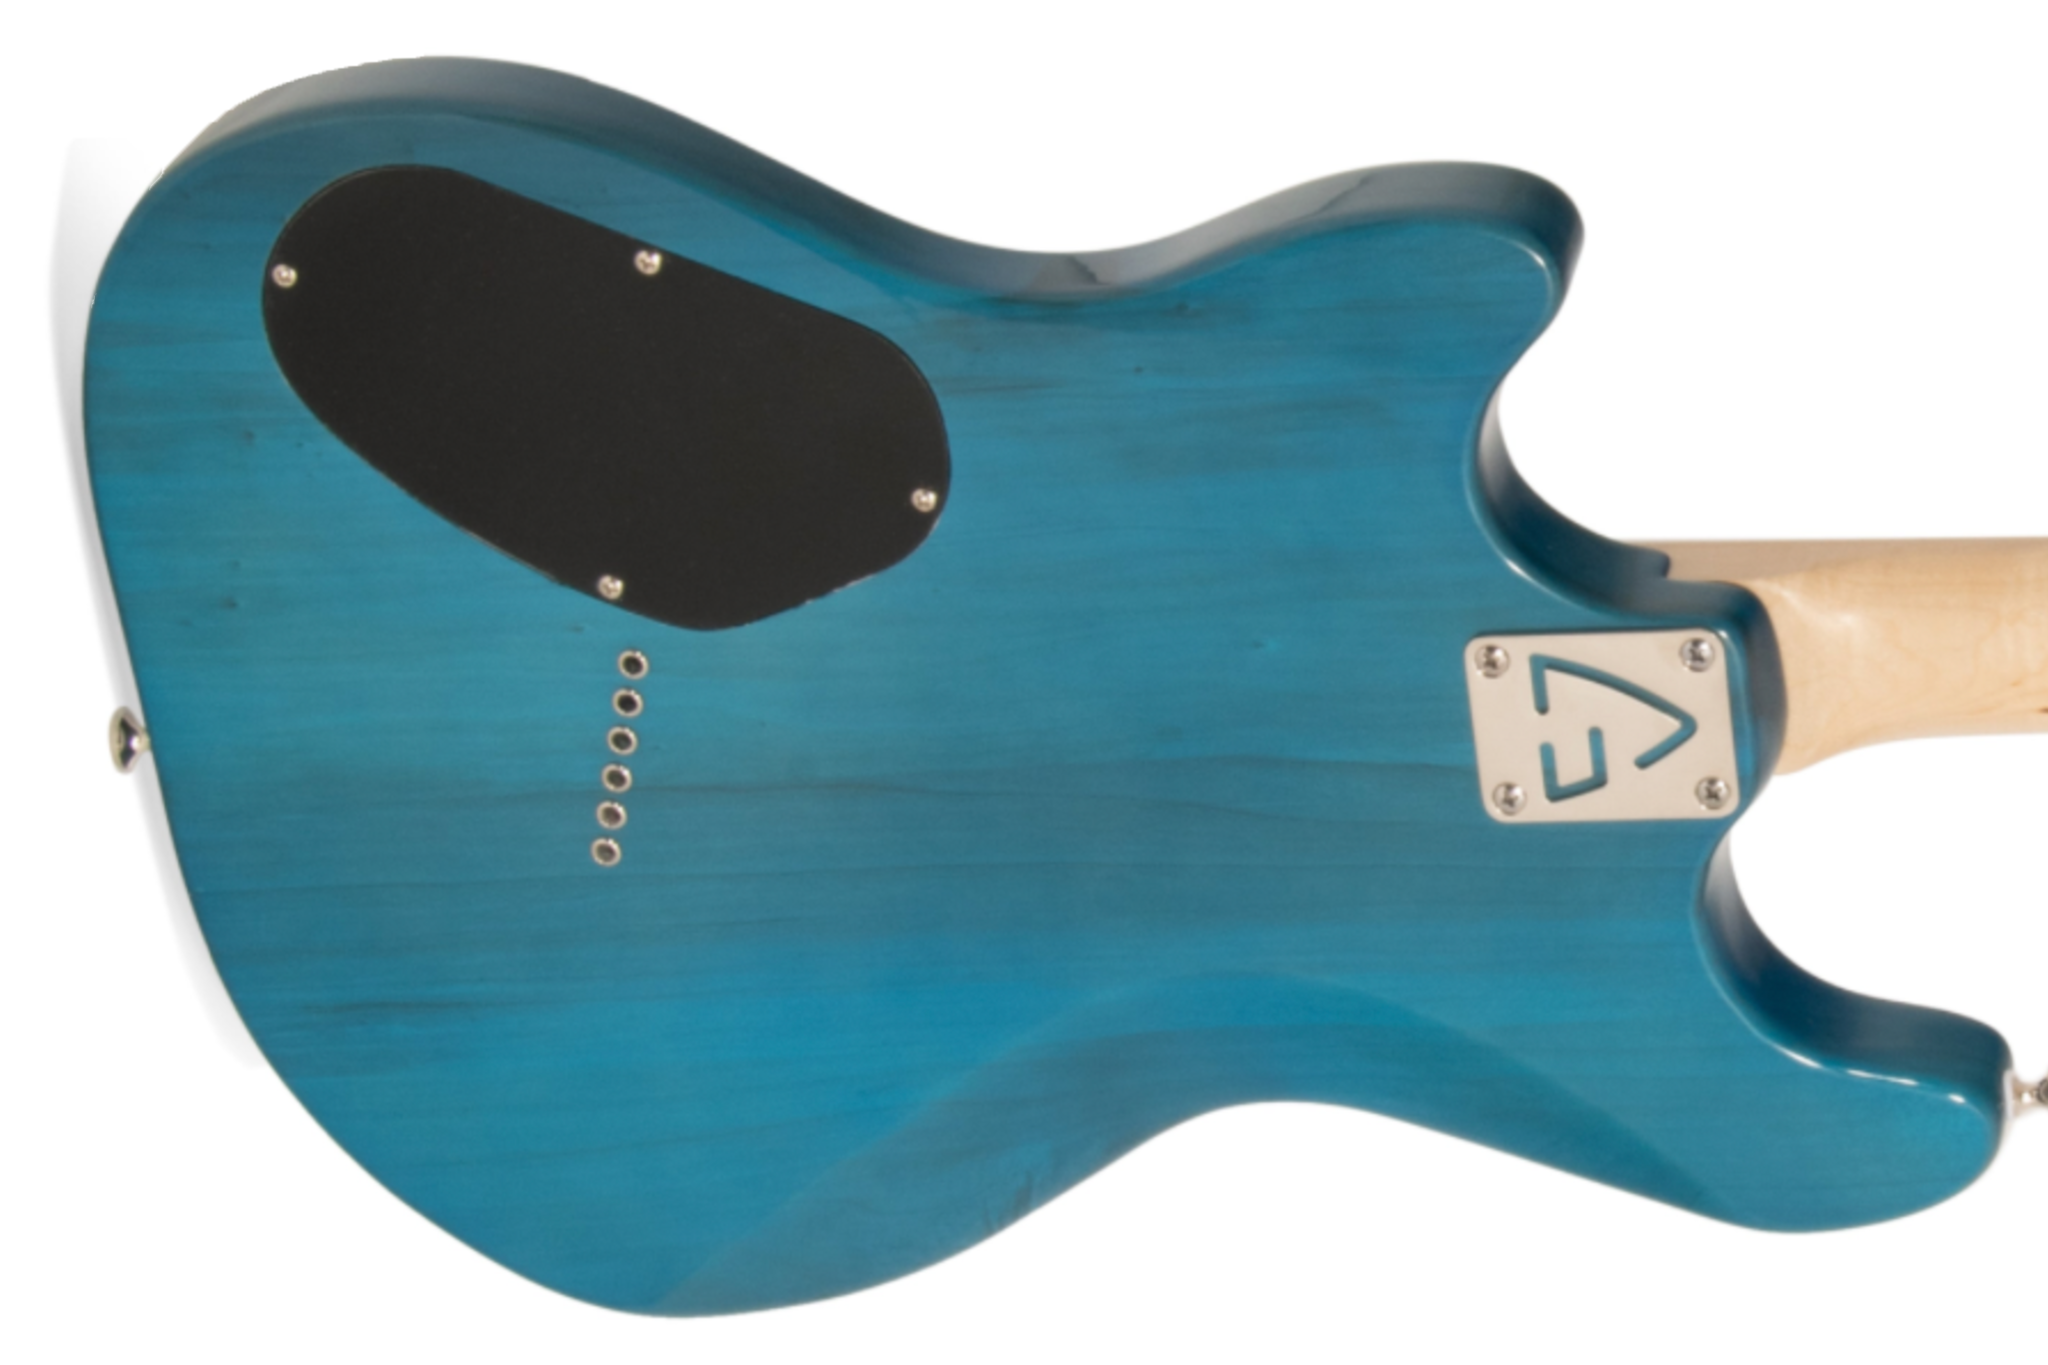 Guild Surfliner Electric Guitar Blue "No More Tears"